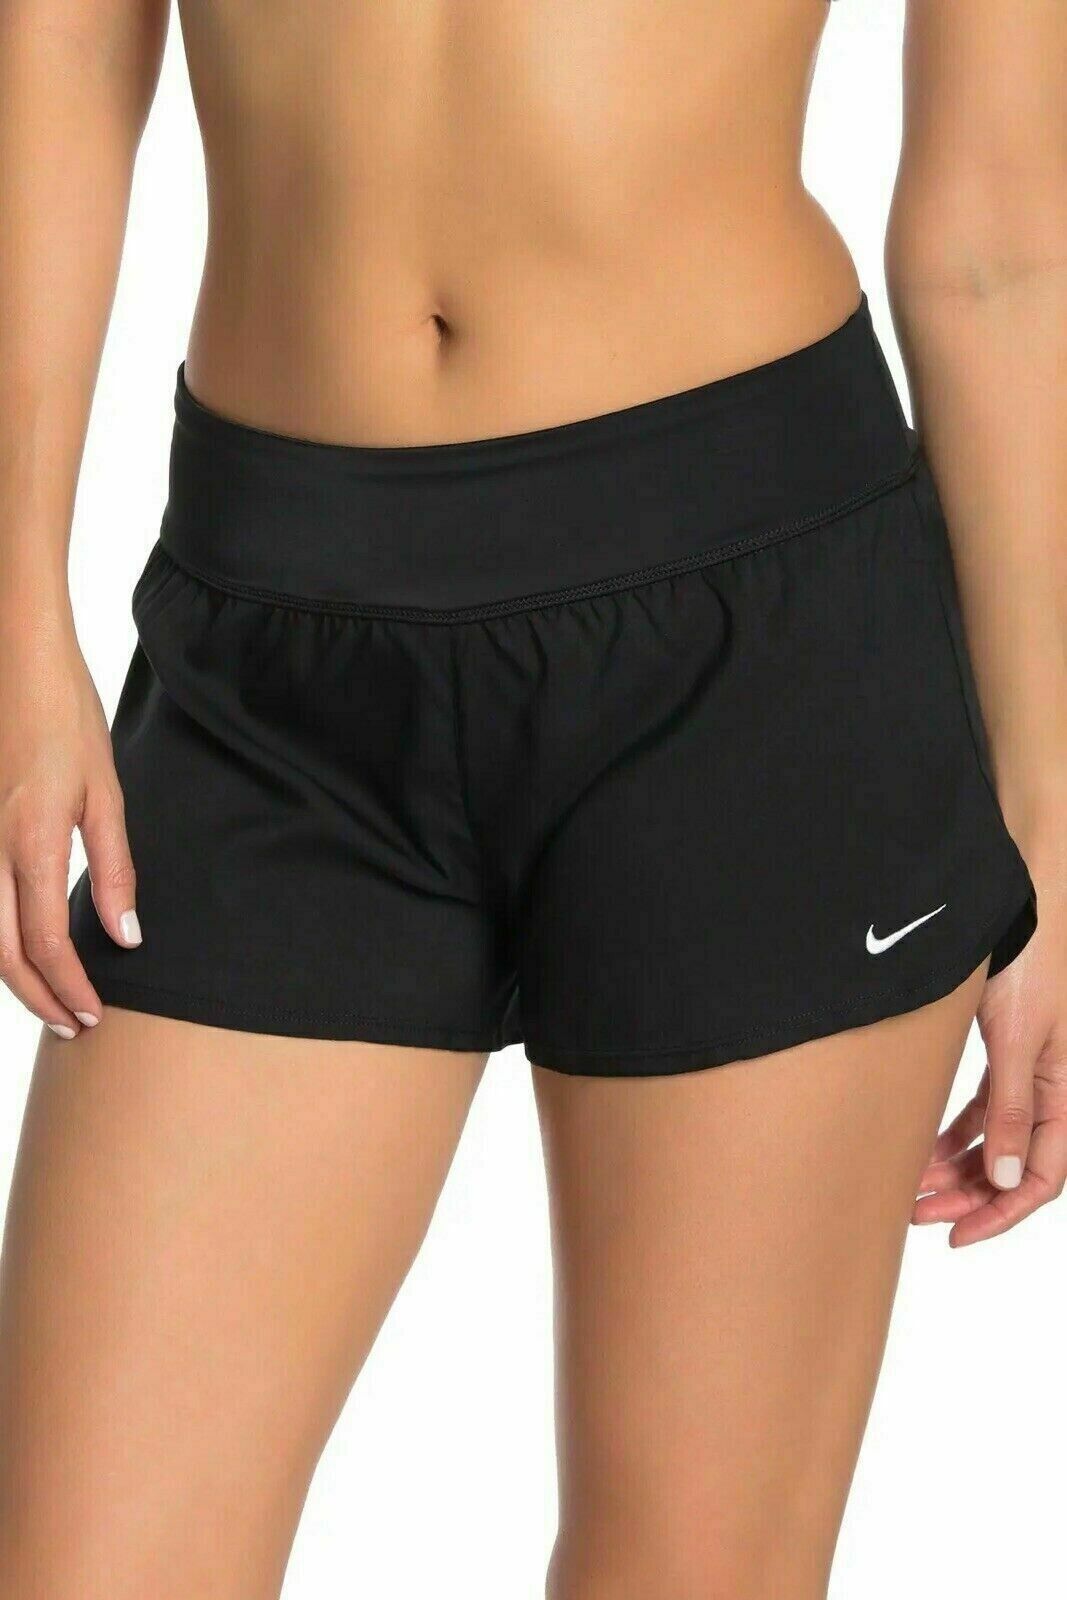 Primary image for  Nike Women's Solid Boardshort Swim Bottom Black Size Large NESS9389-001